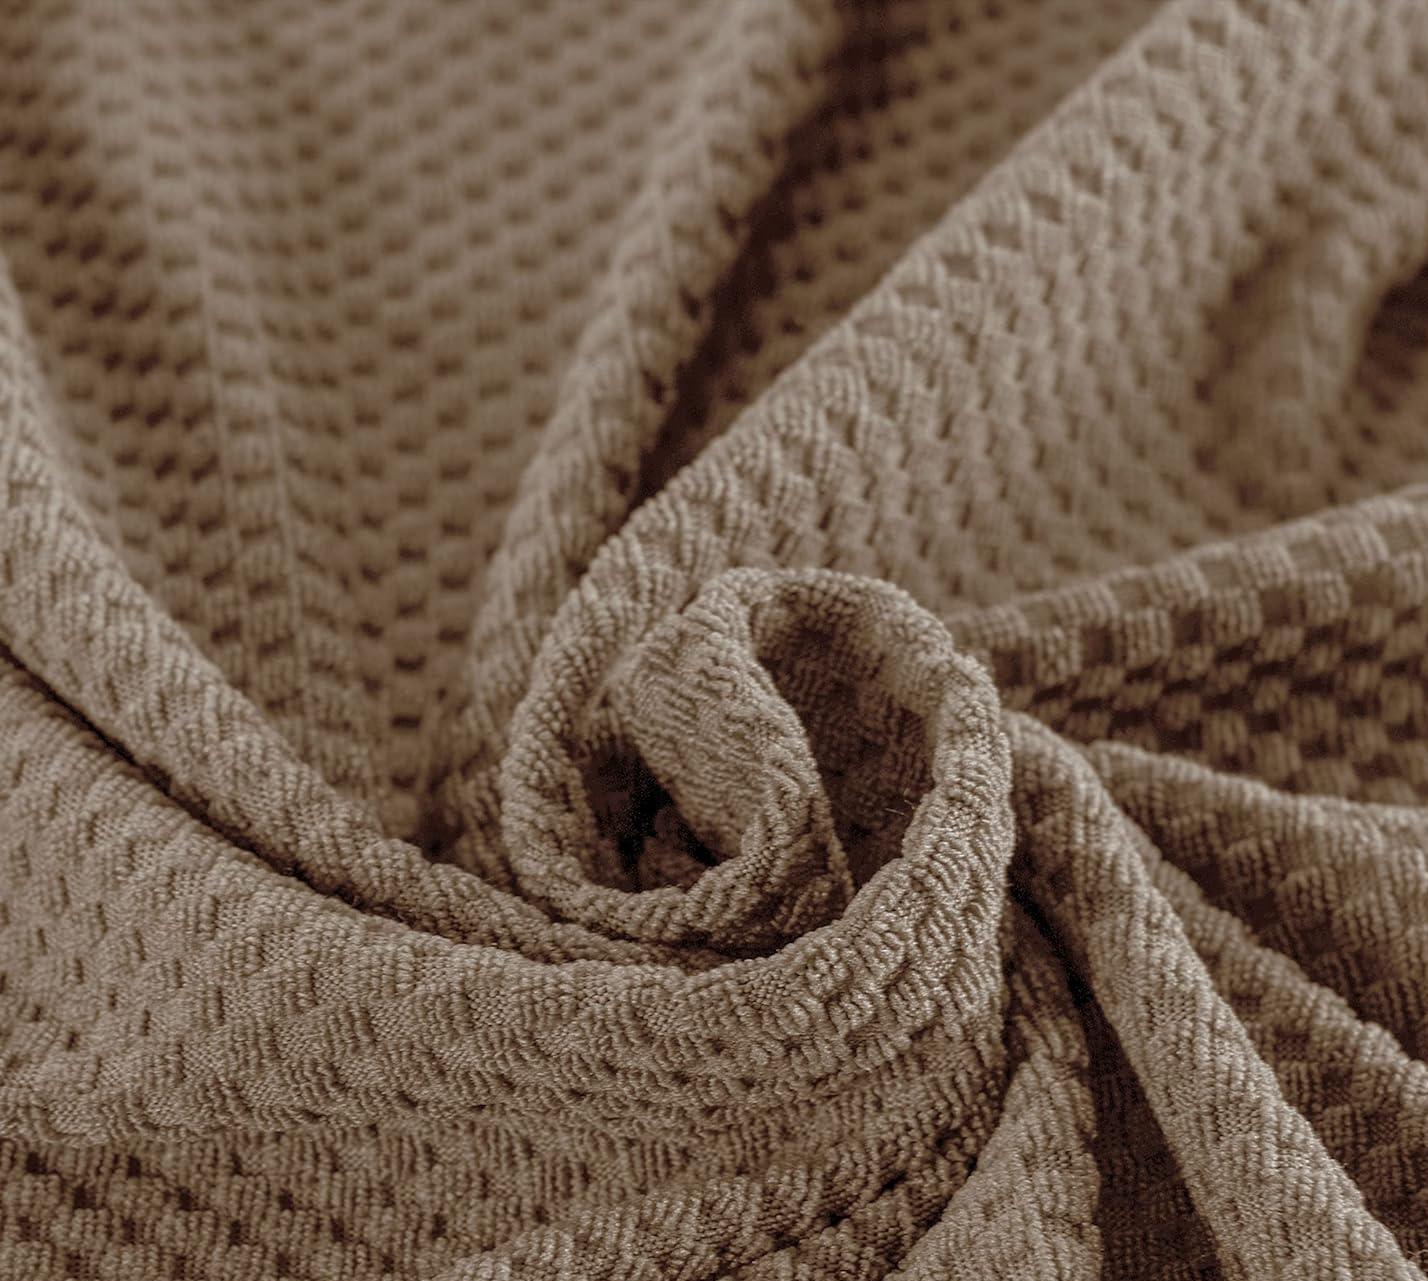 Subtex Woven fabrics and knittedfabrics